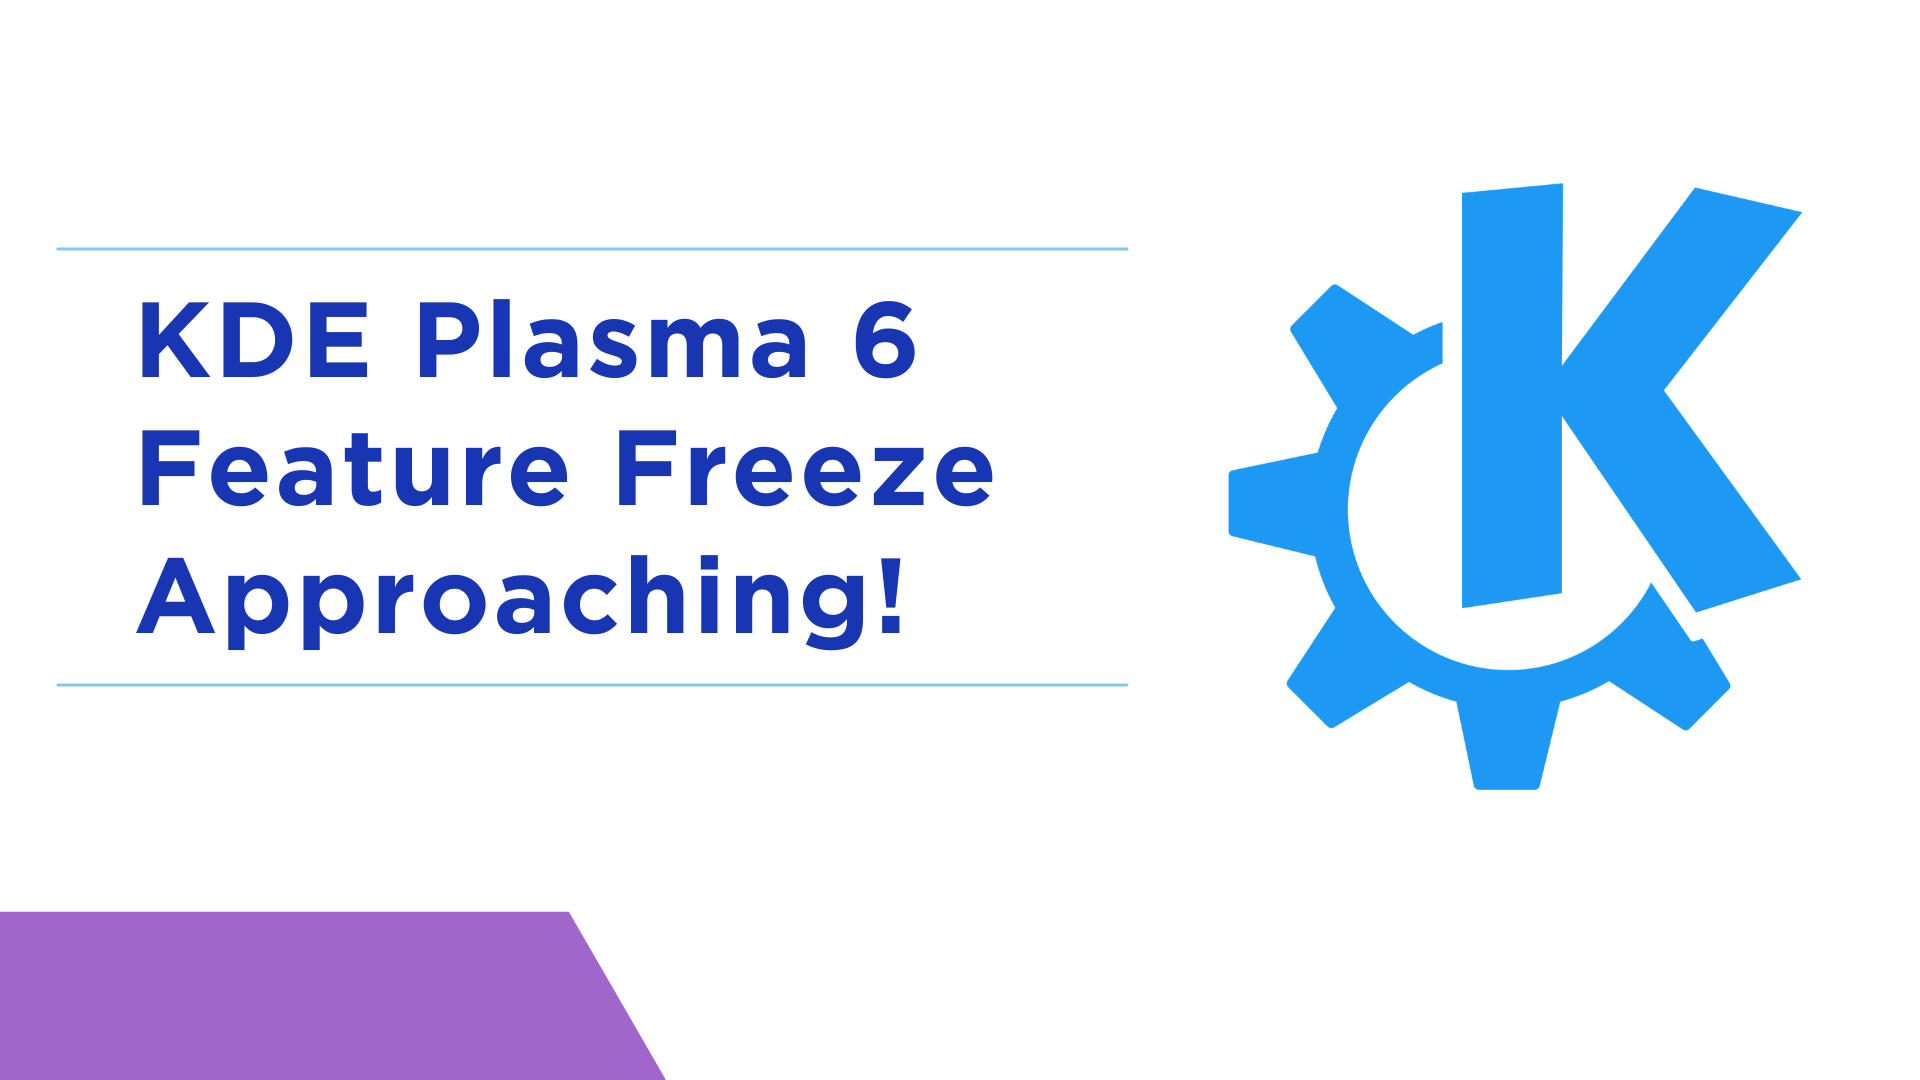 KDE Plasma 6 Feature Freeze Approaching!